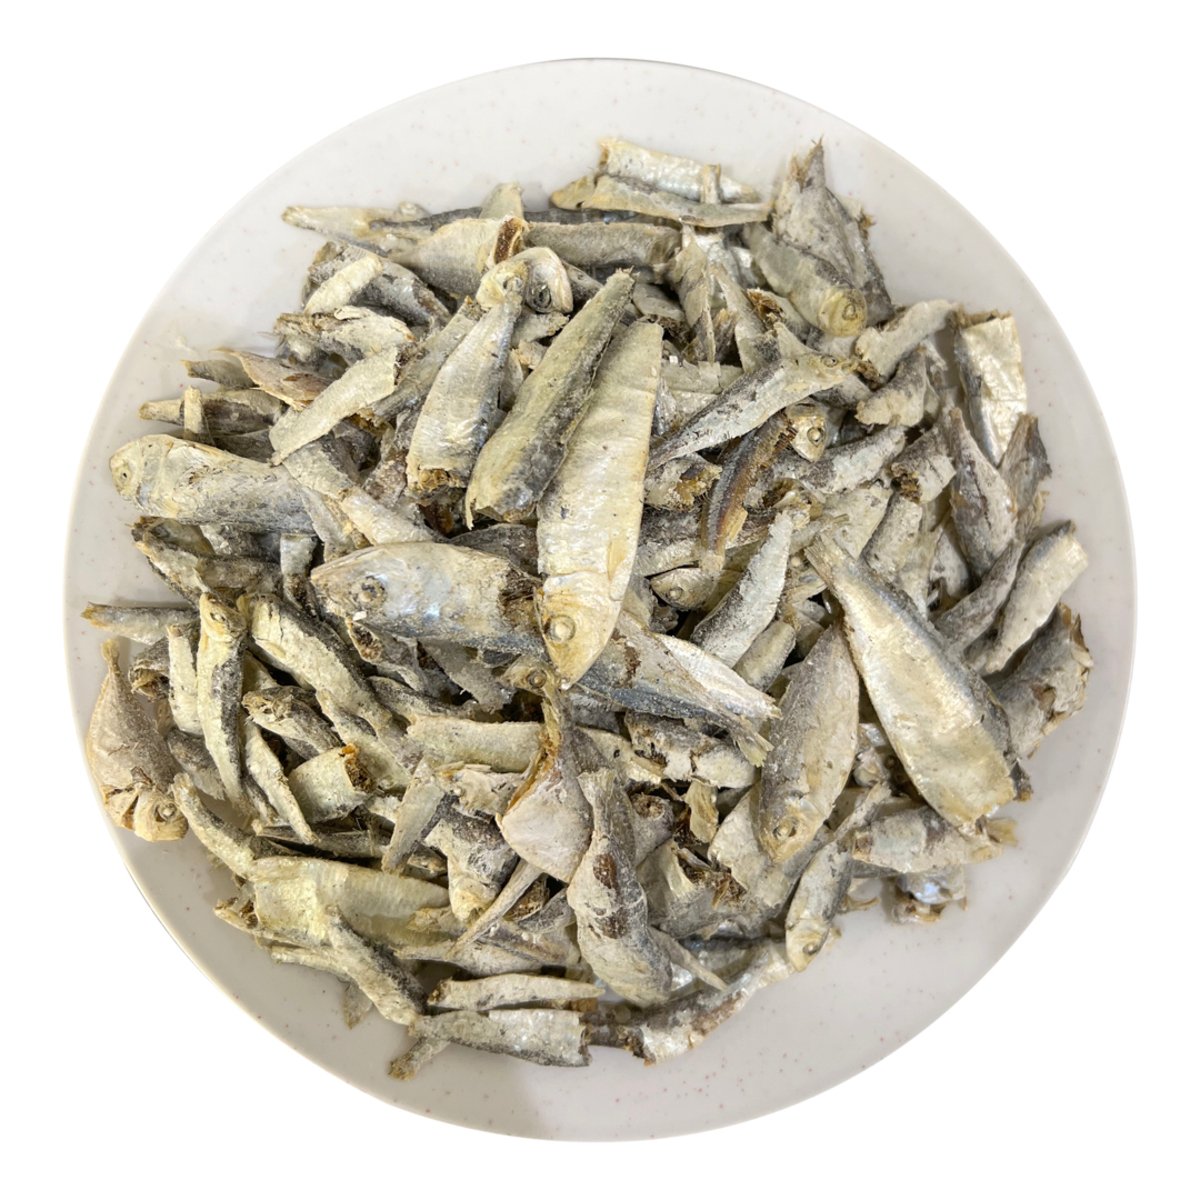 Supefish Ikan Bilis Tamban AAA 250g Approx Weight